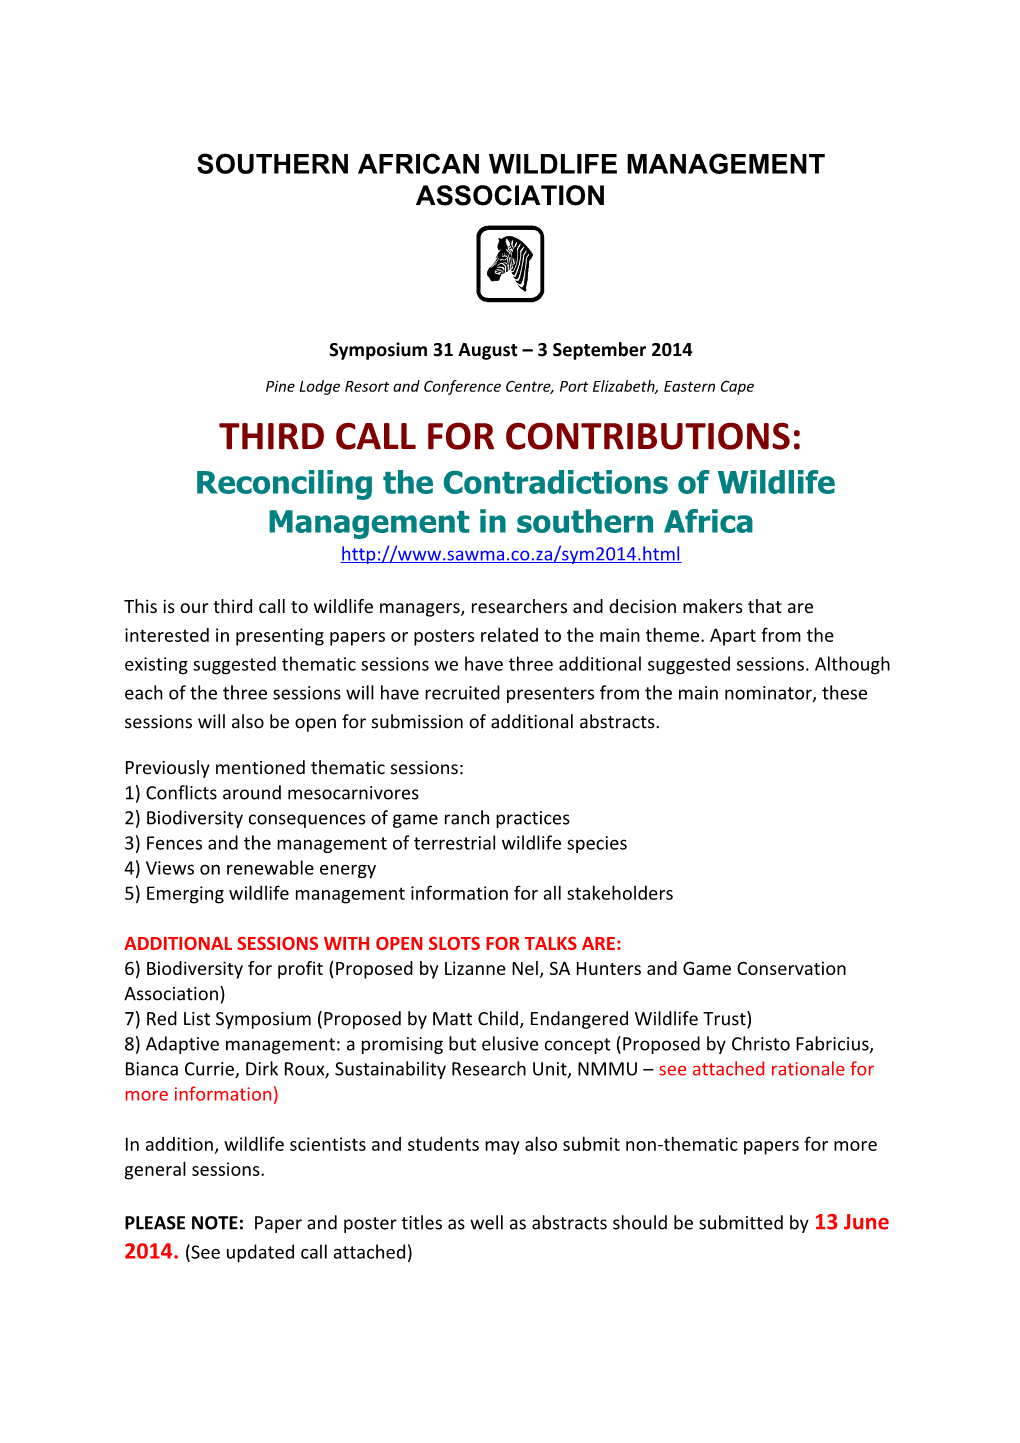 Southern African Wildlife Management Association